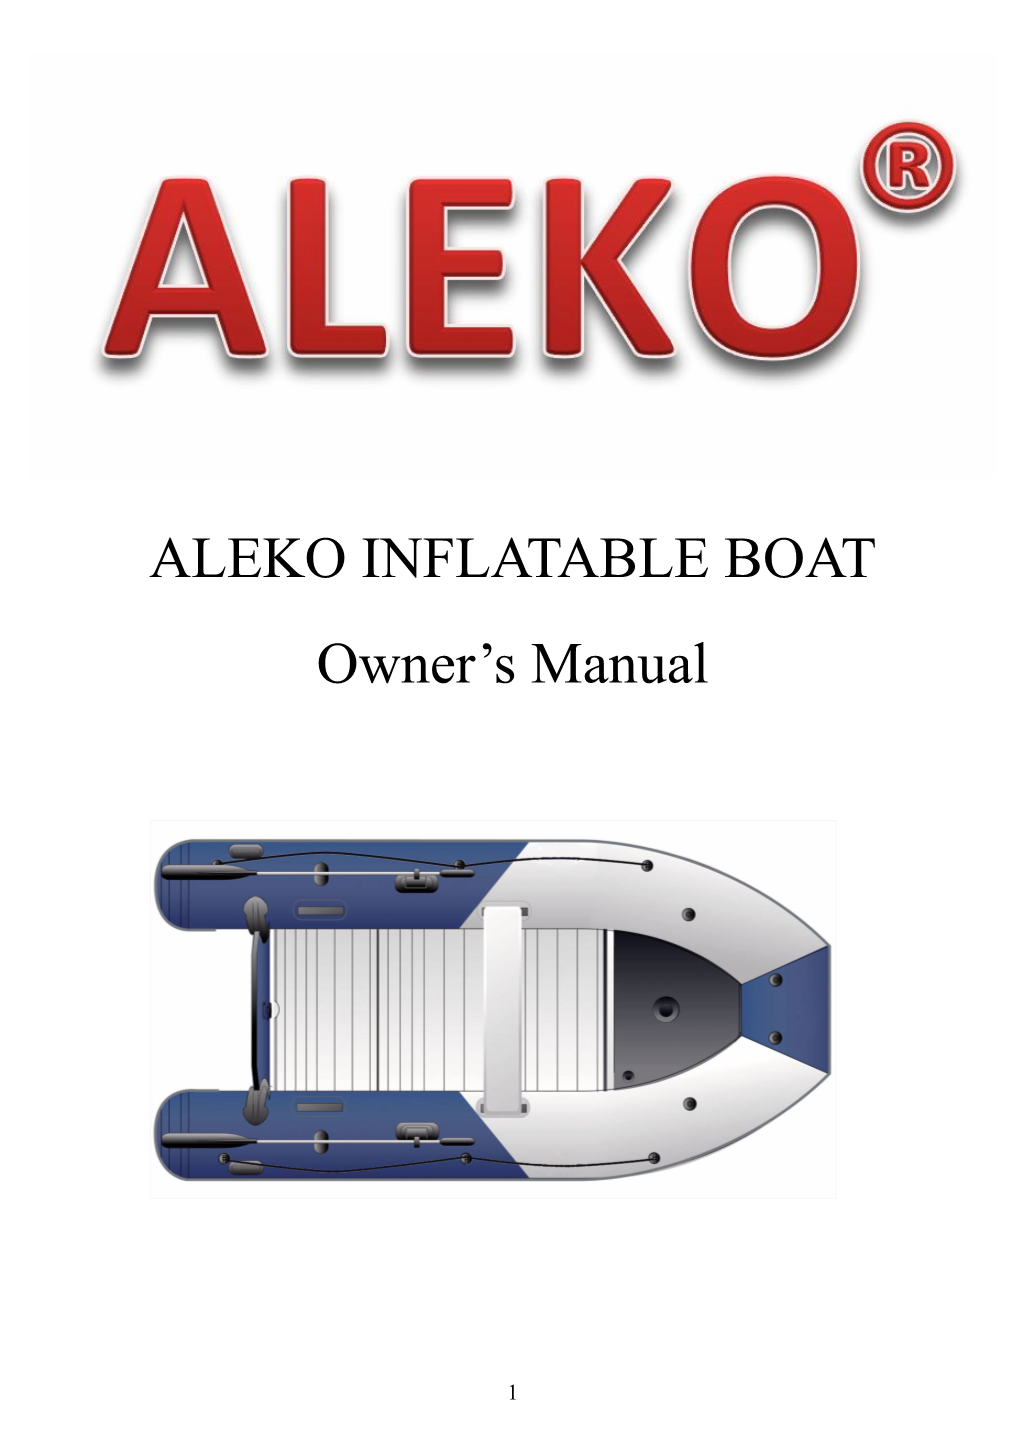 ALEKO INFLATABLE BOAT Owner's Manual